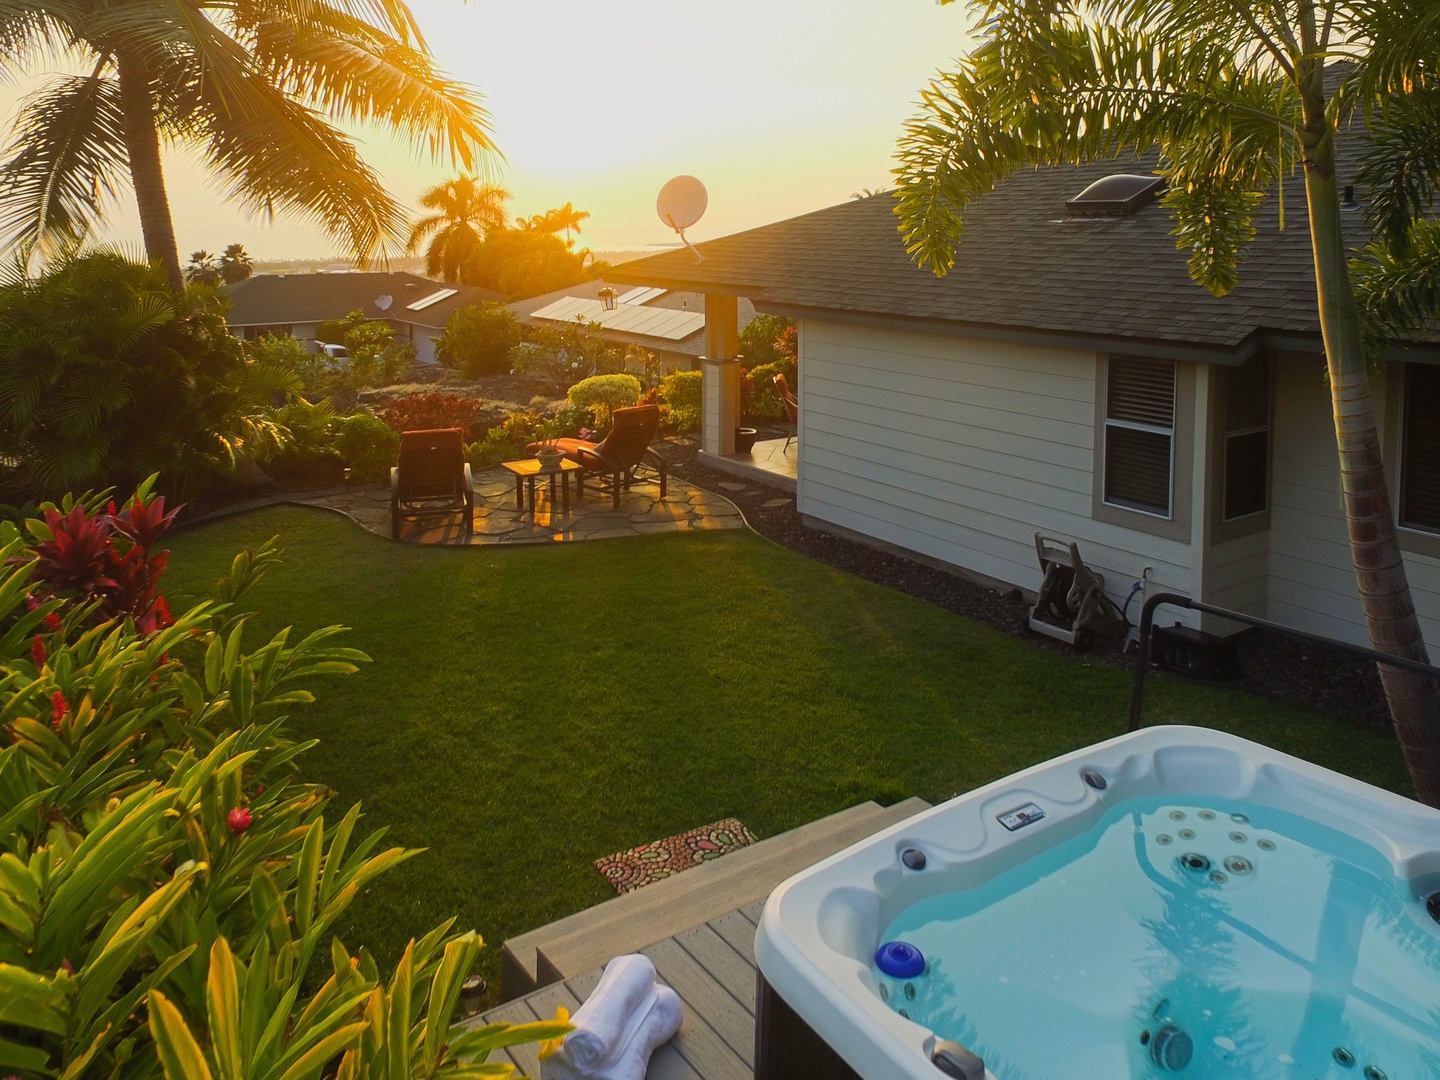 Kailua Kona Vacation Rentals, Hale Alaula - Ocean View - Enjoy glowing sunsets from the hot tub!